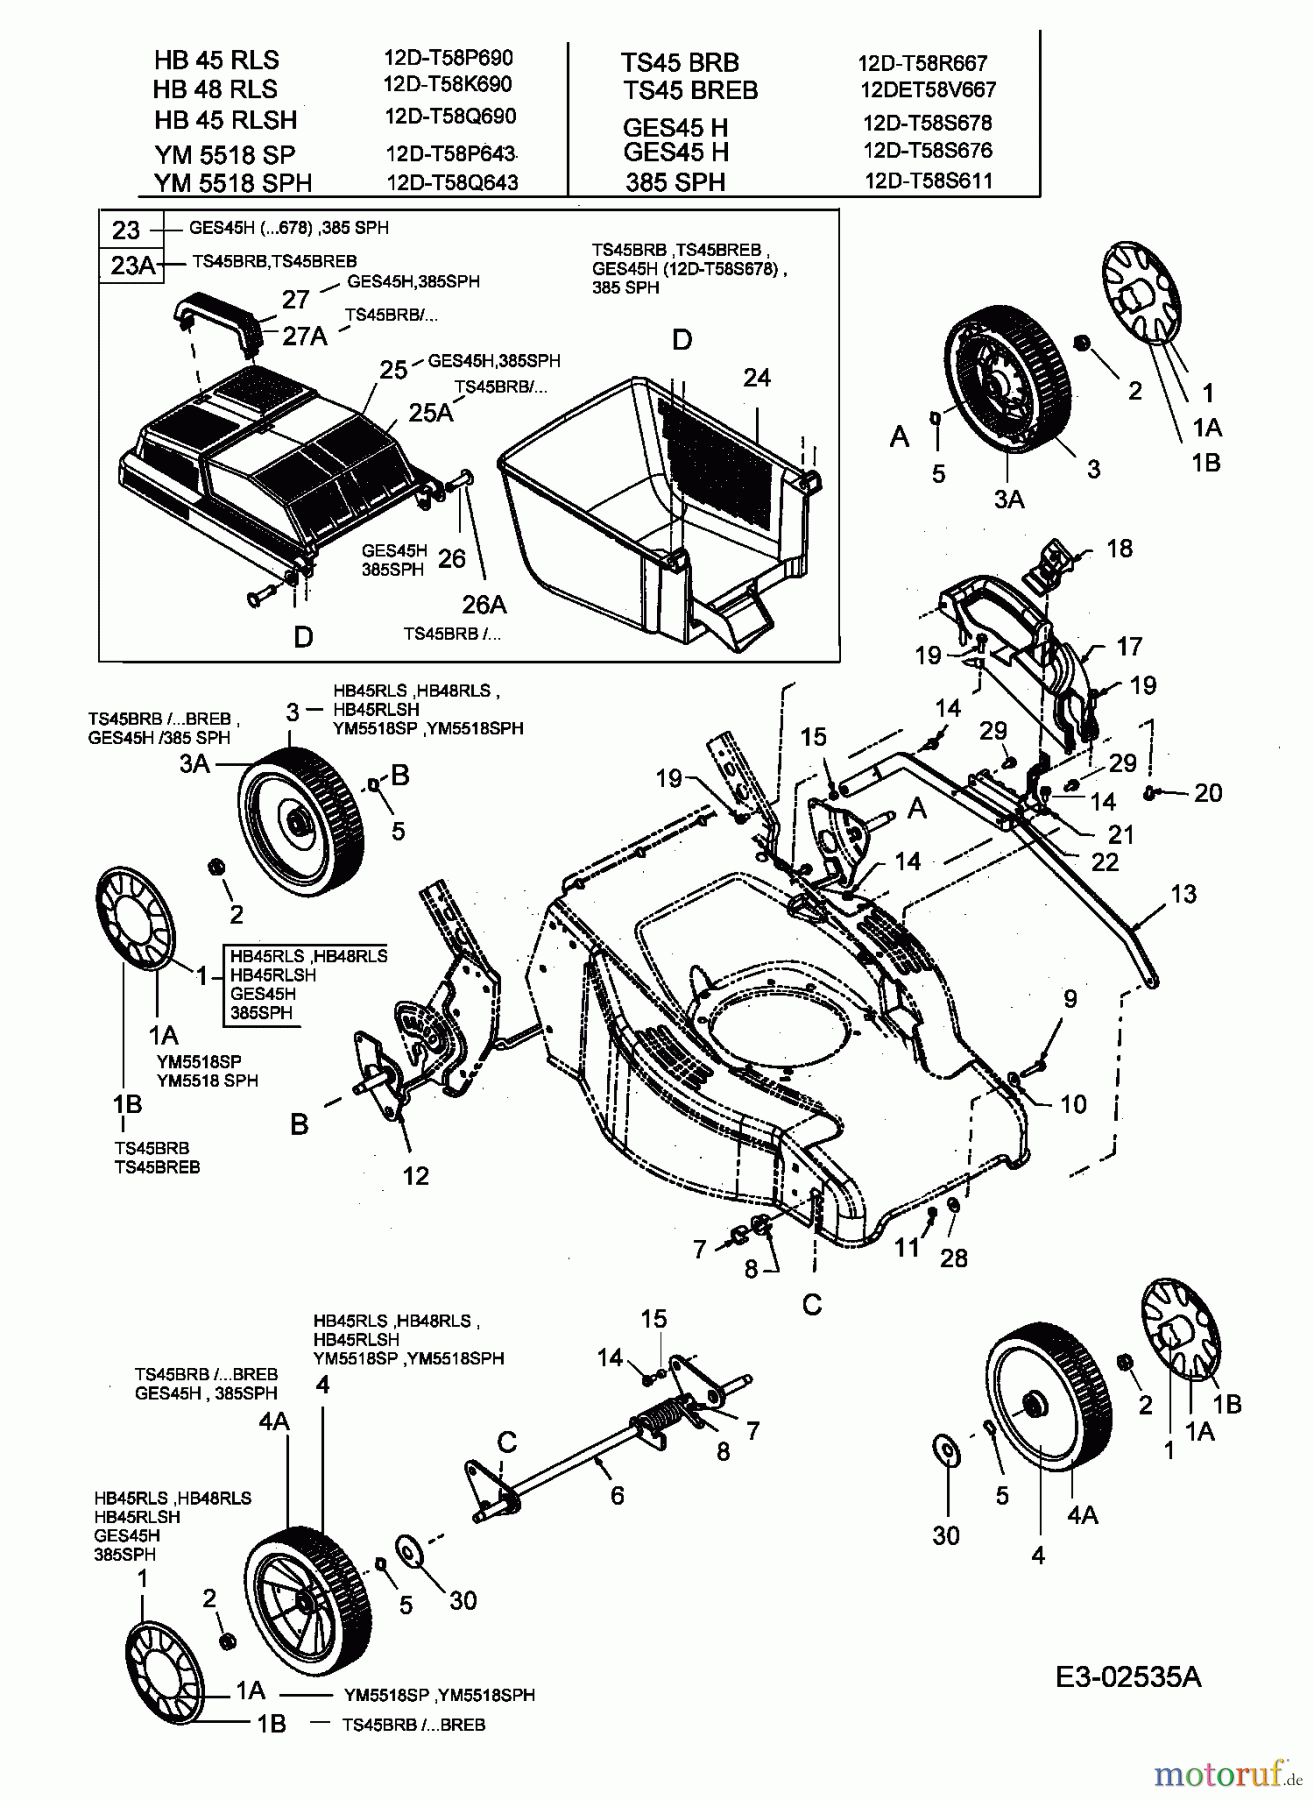  Turbo Silent Motormäher mit Antrieb TS 45 BR-B 12D-T58R667  (2005) Grasfangkorb, Höhenverstellung, Räder